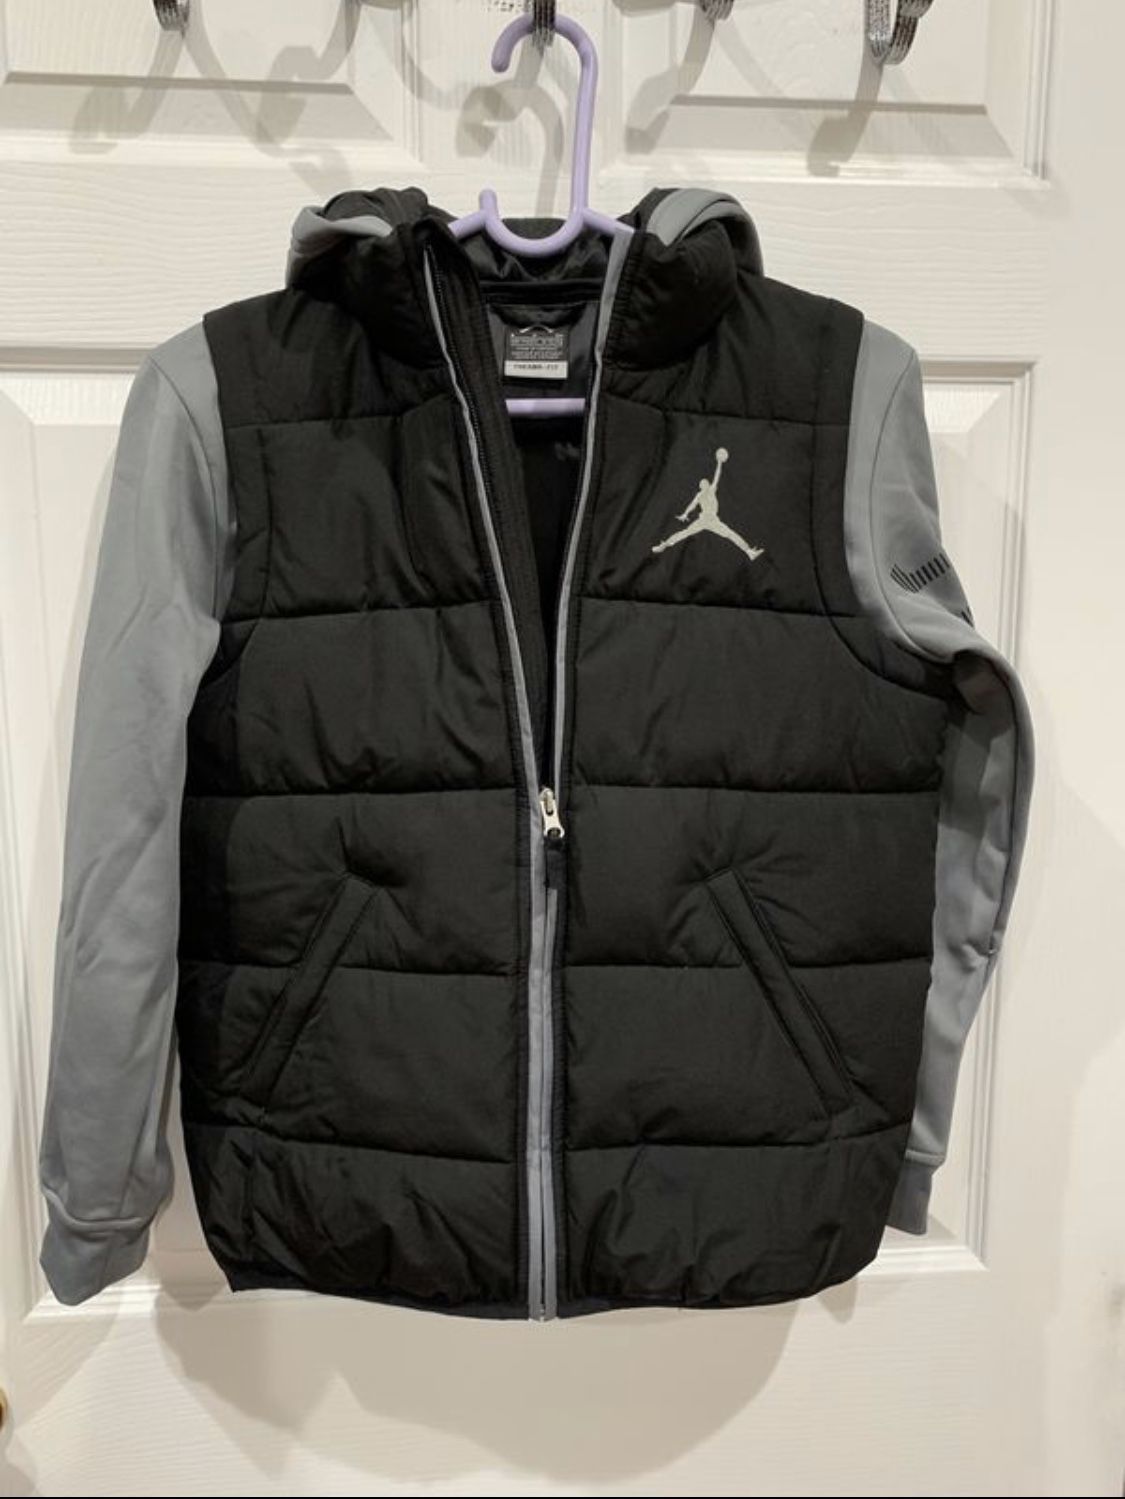 Kids Jordan jacket size small $15